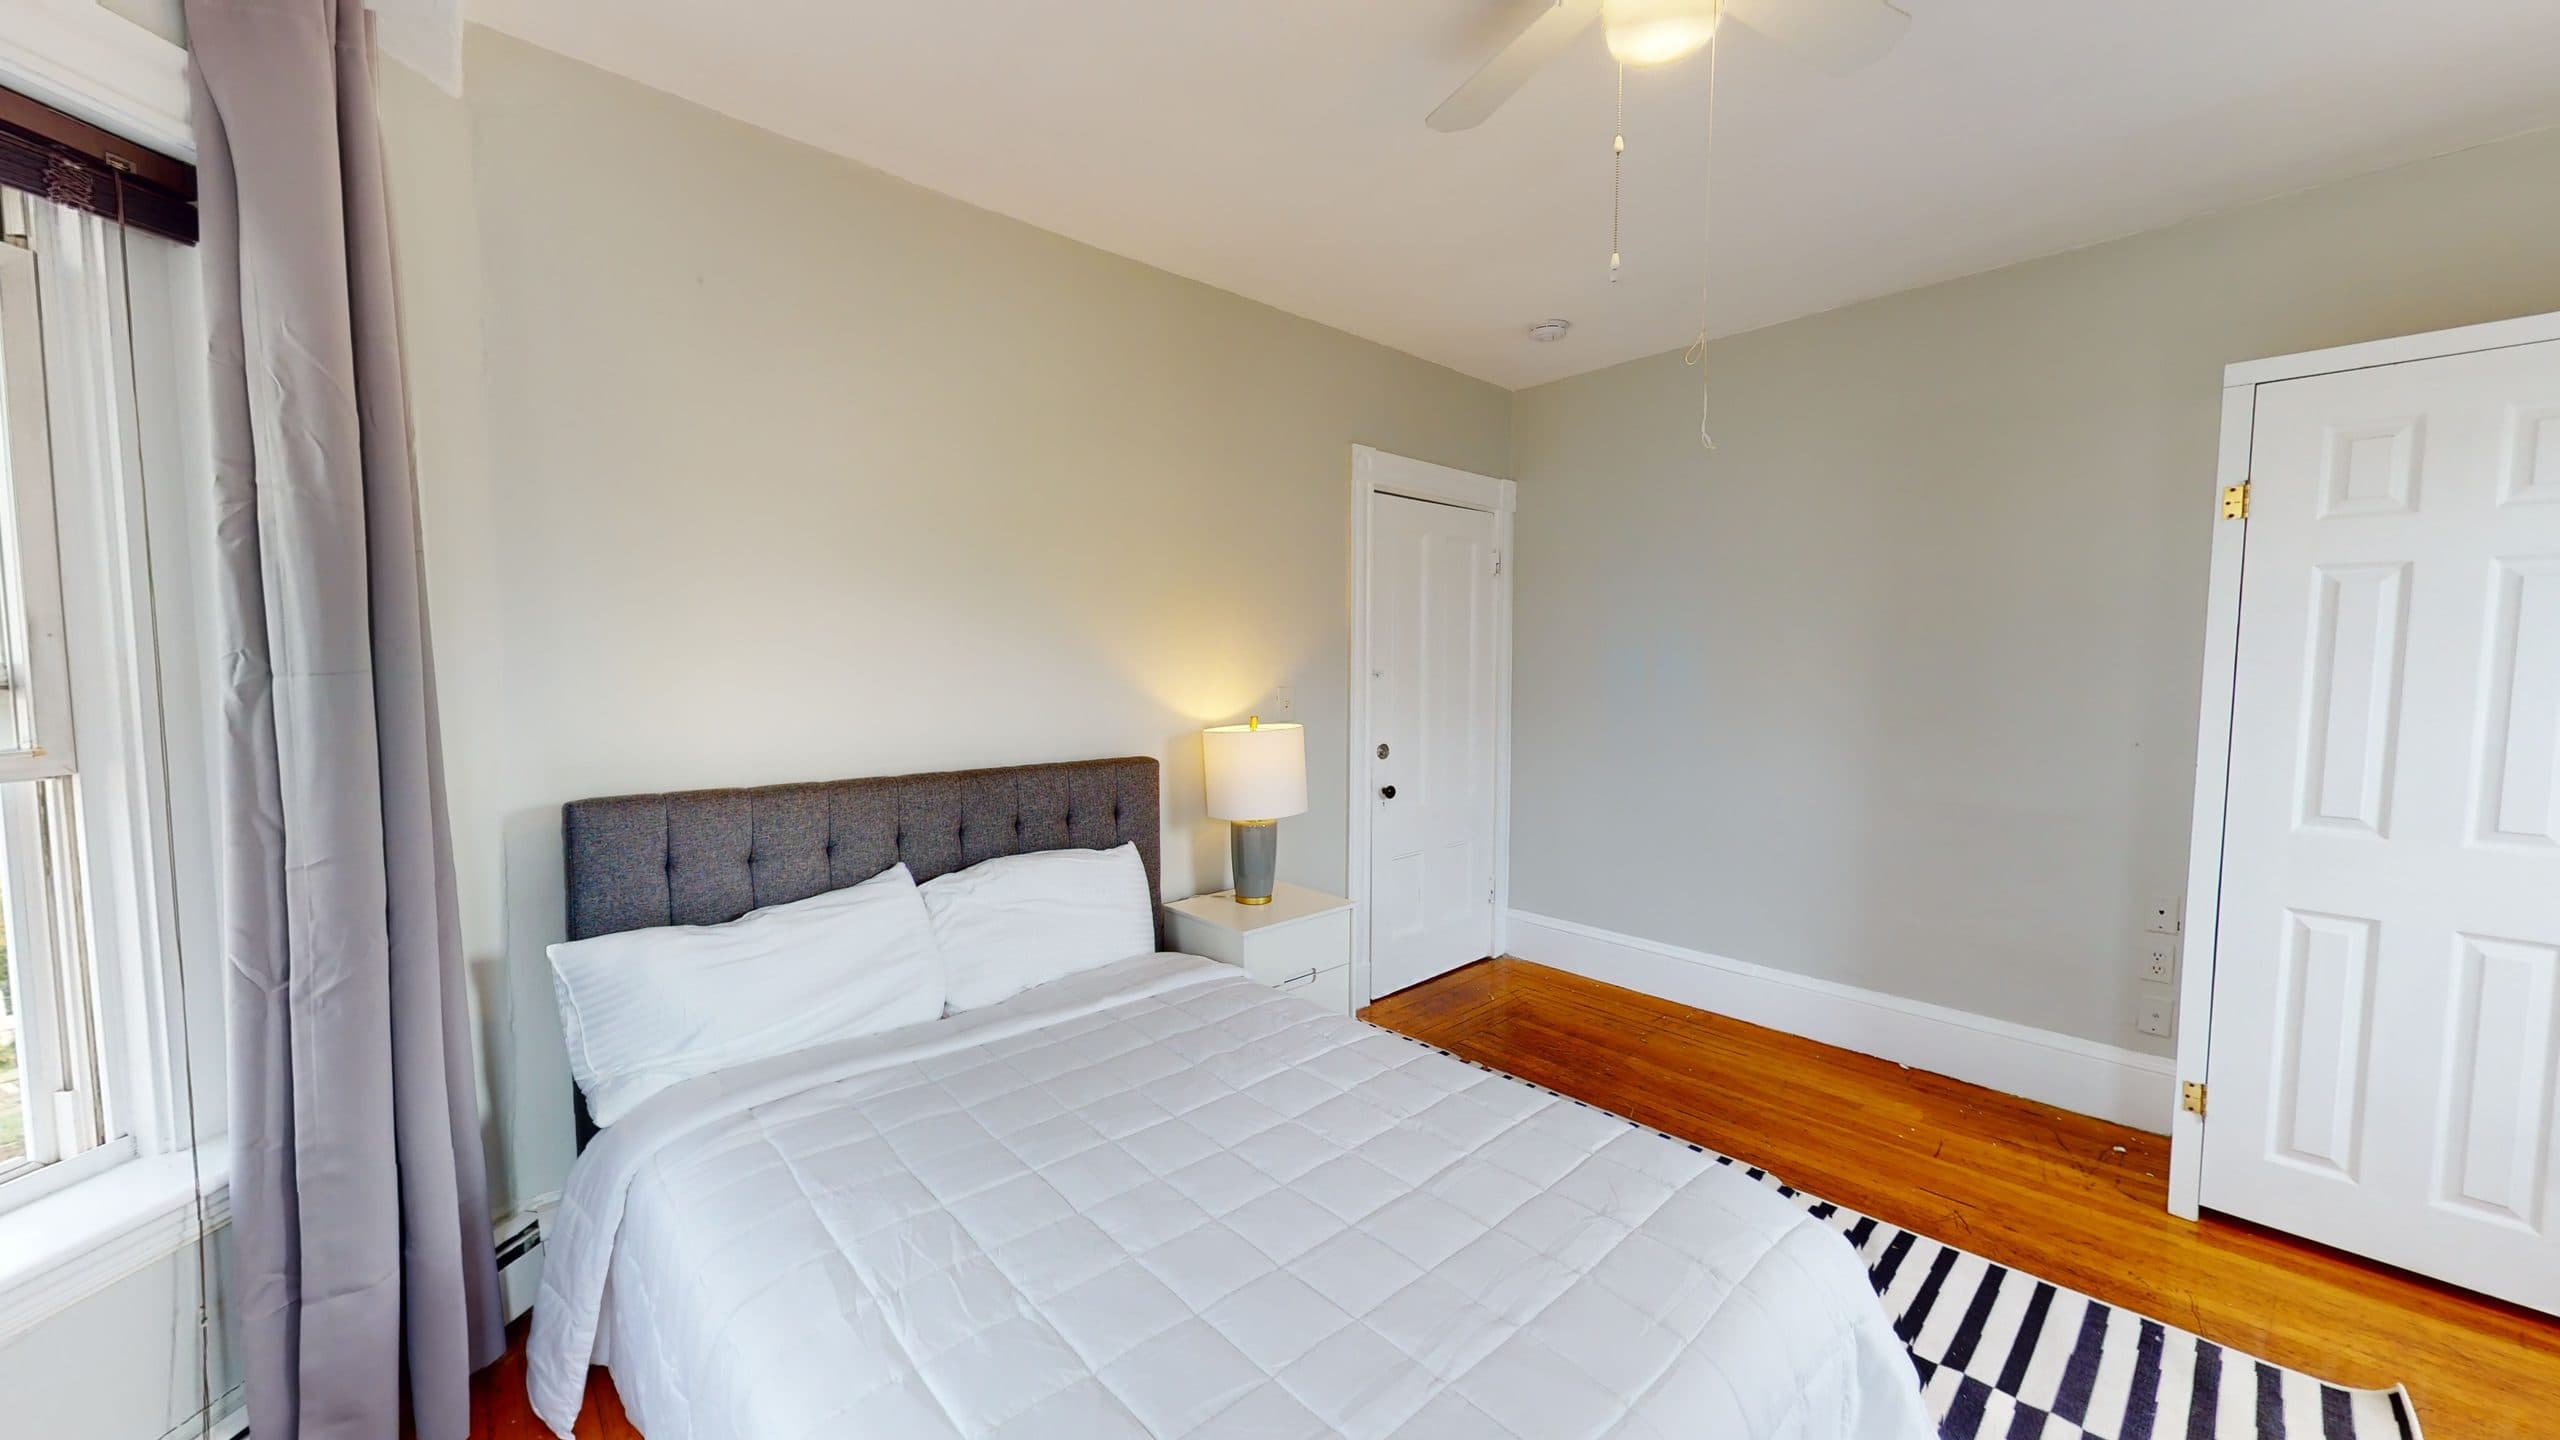 Photo 2 of #4030: Full Bedroom B at June Homes